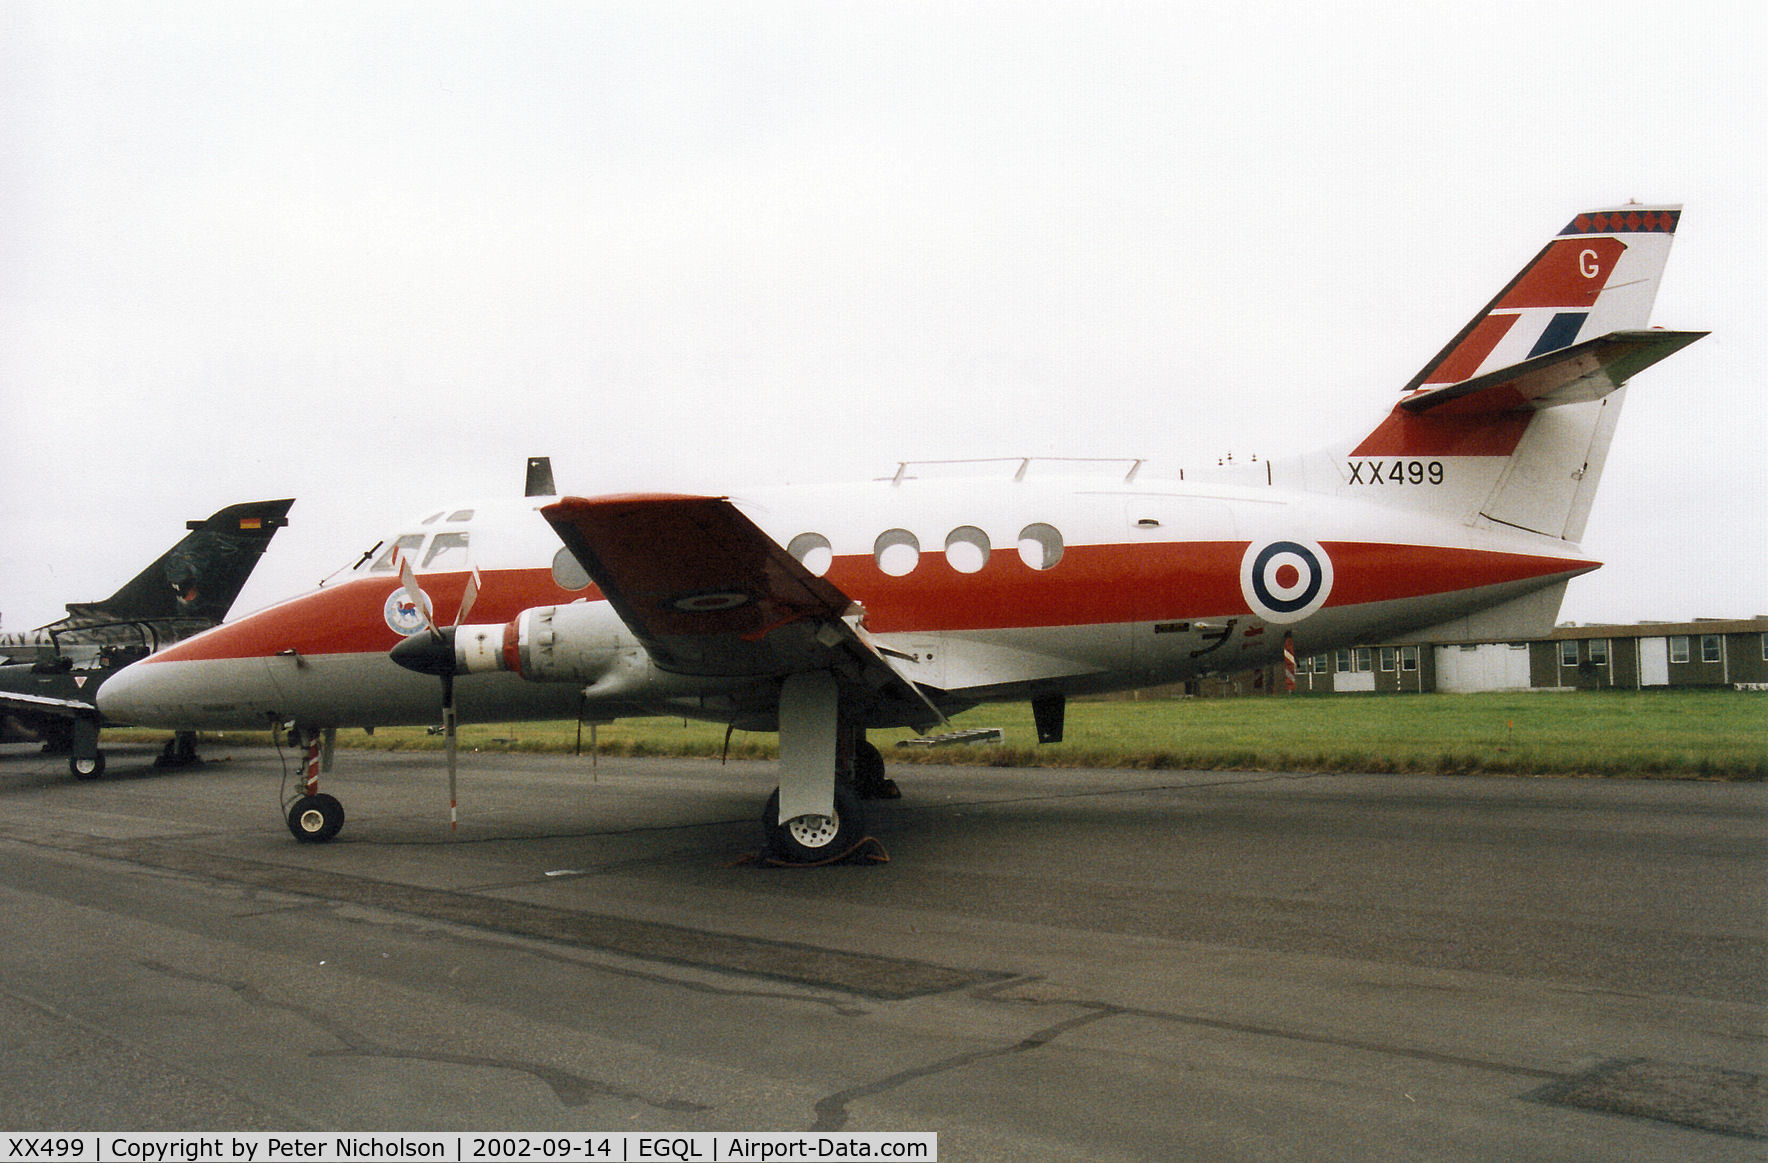 XX499, 1976 Scottish Aviation HP-137 Jetstream T.1 C/N 425, Jetstream T.1, callsign CWL 45, of 45 [Reserve] Squadron at RAF Cranwell on display at the 2002 RAF Leuchars Airshow.